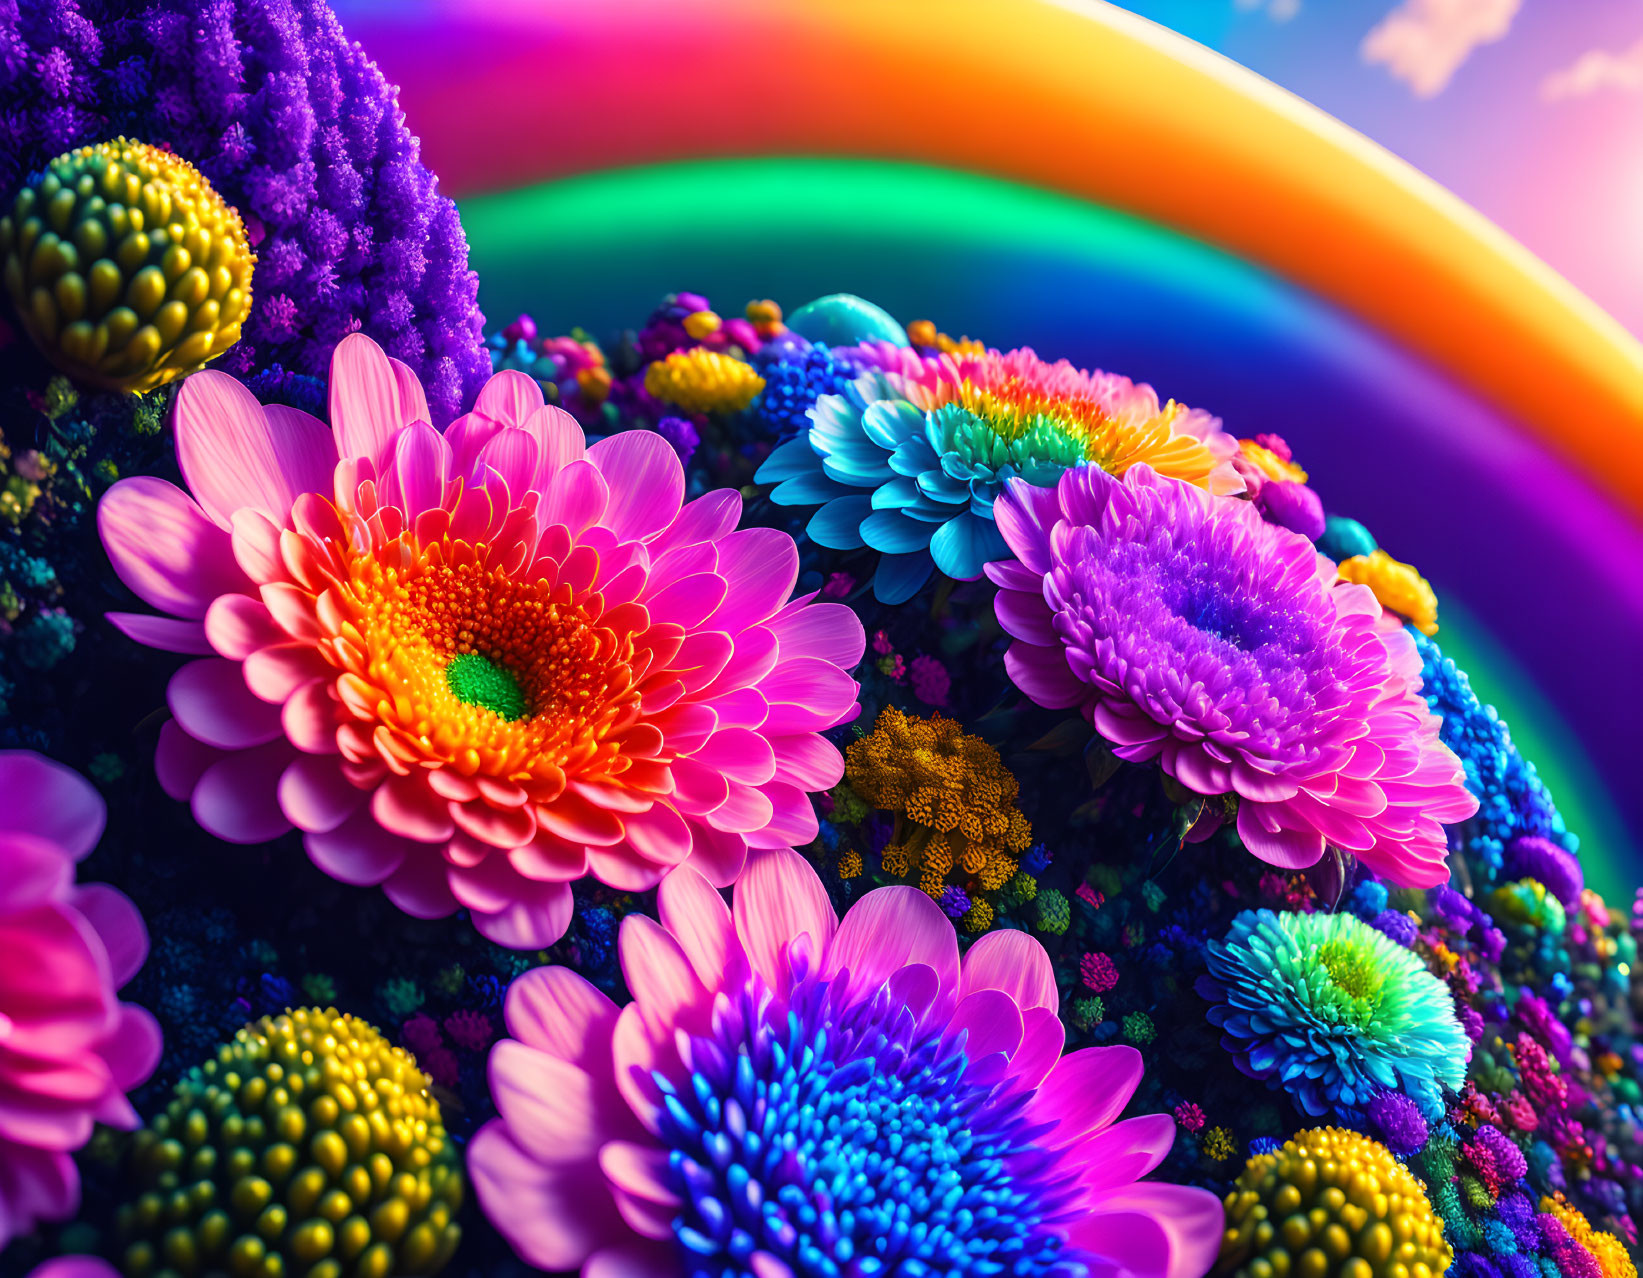 Flowers with rainbow